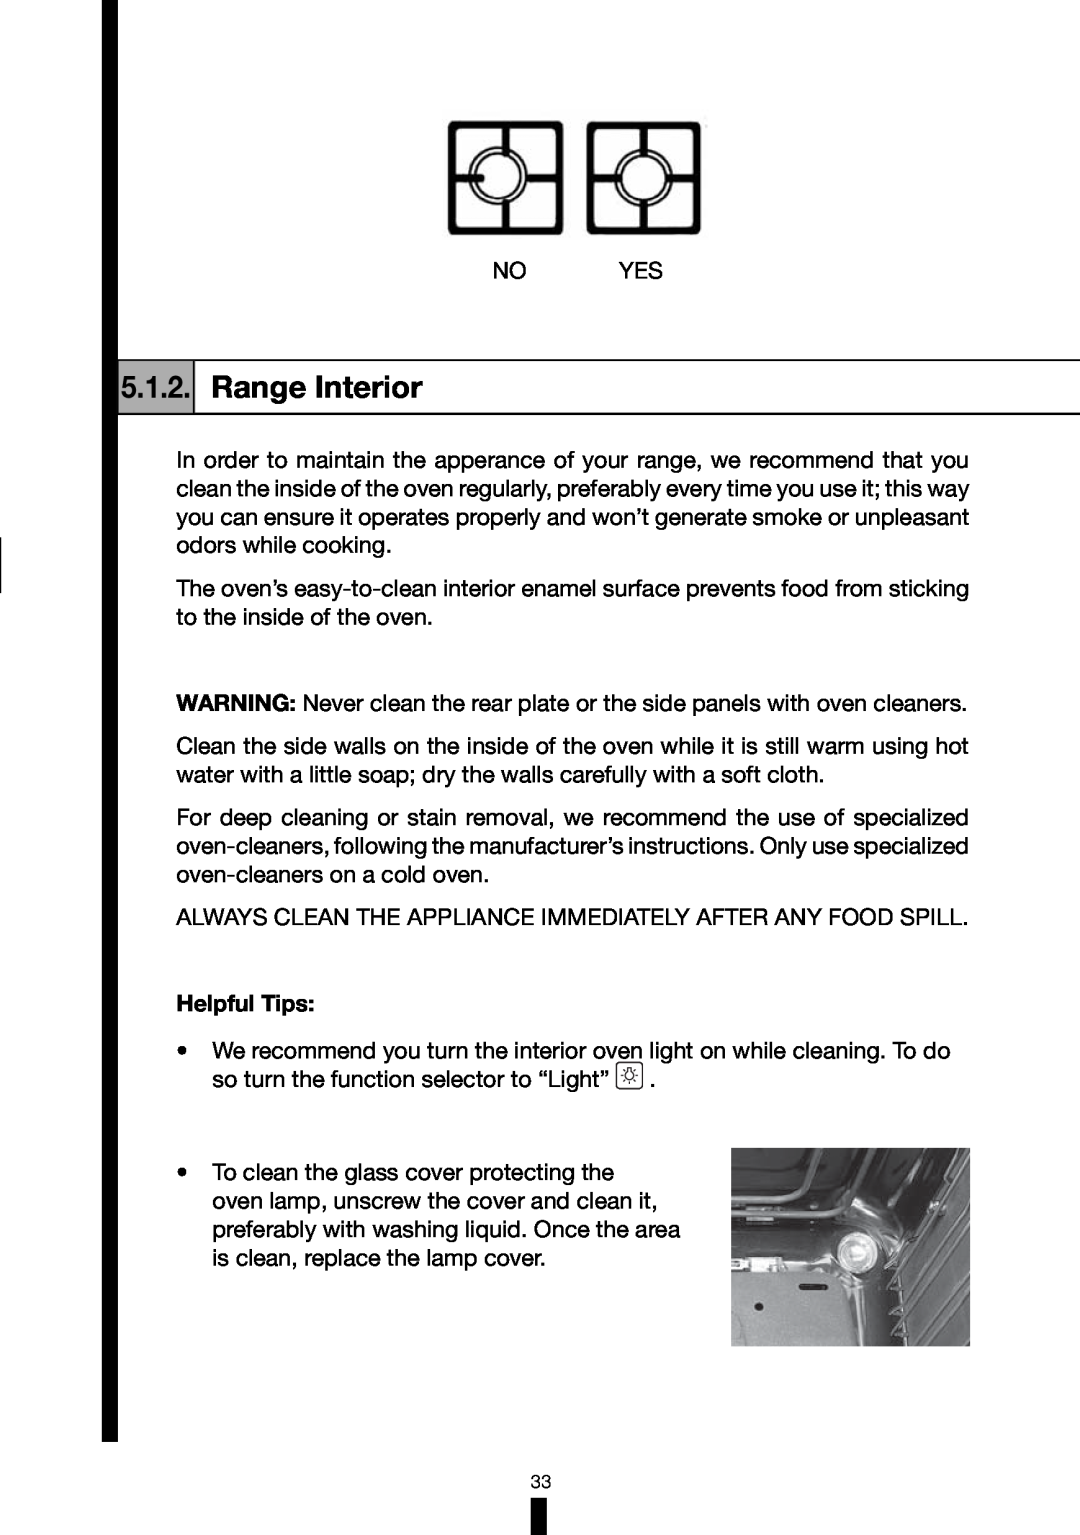 Fagor America RFA-244 DF, RFA-365 DF manual Range Interior, Helpful Tips 